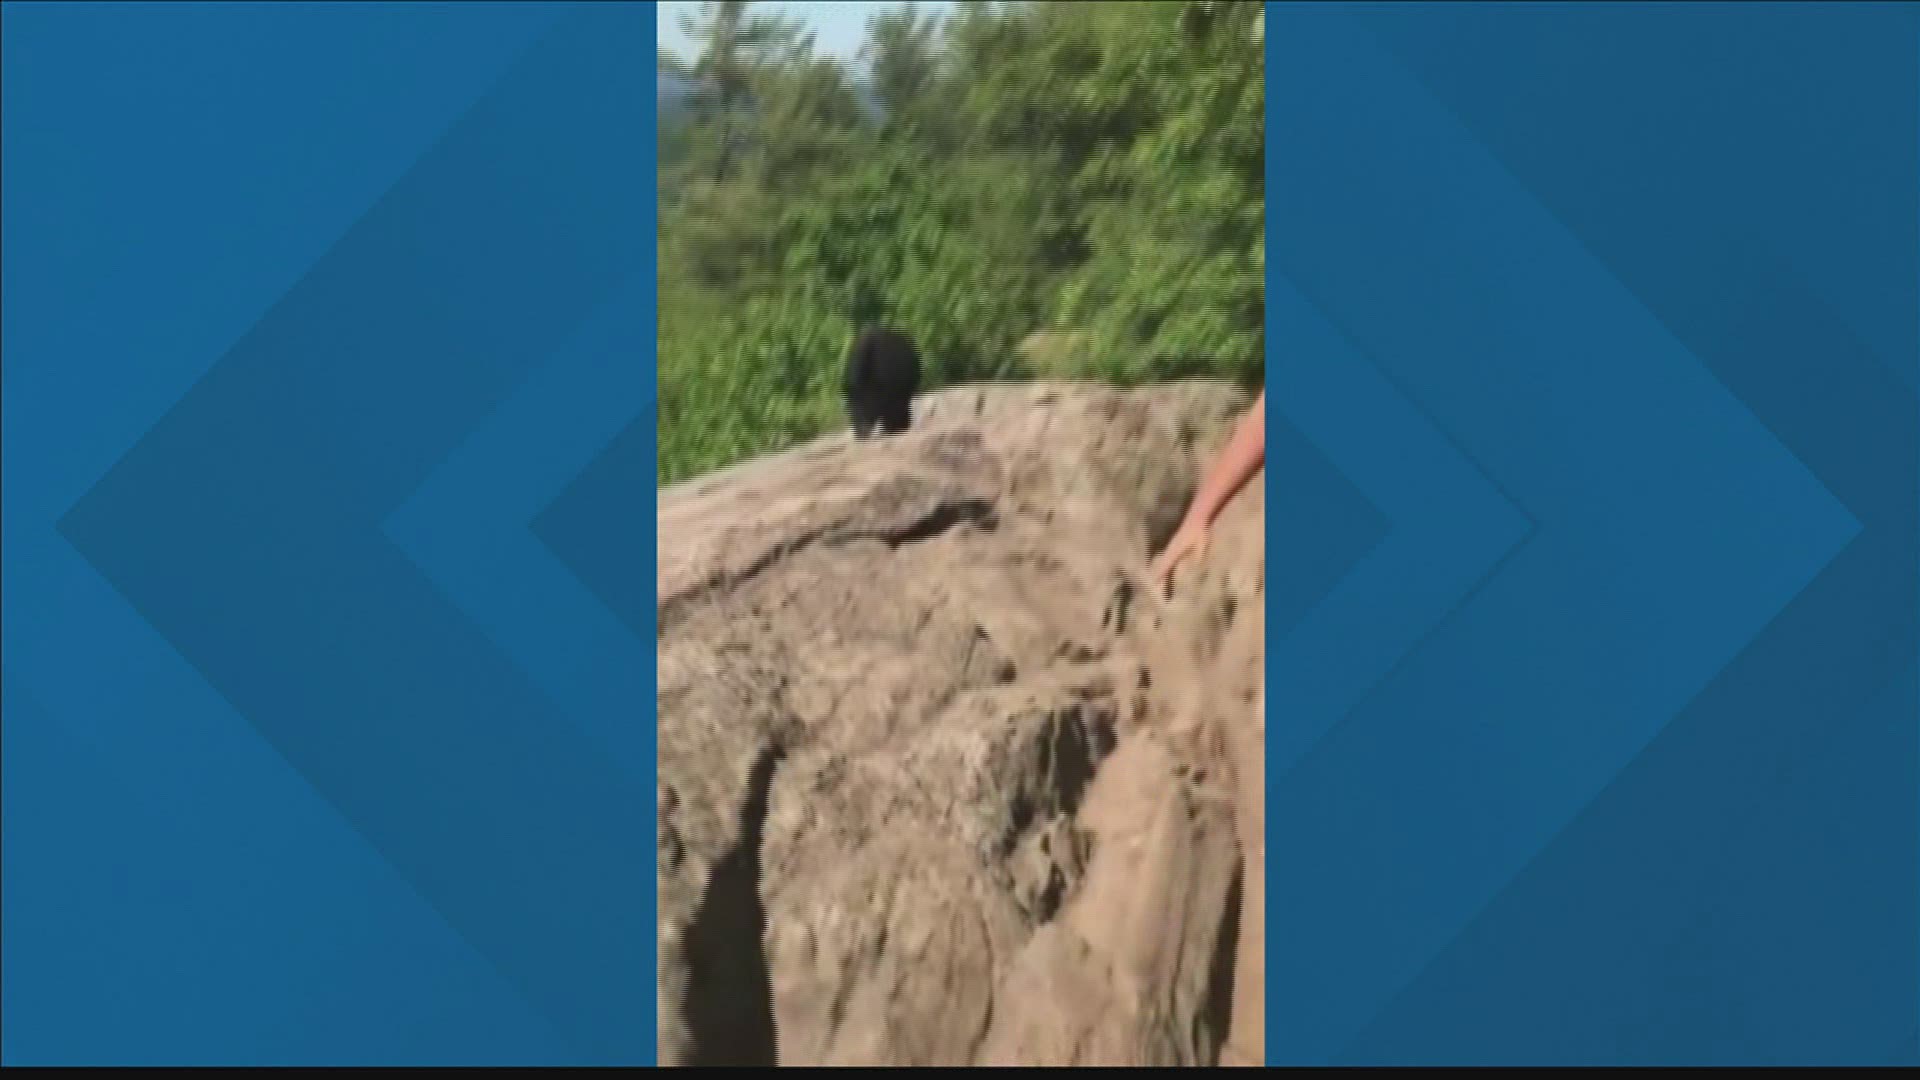 A black bear comes terrifyingly close to a hiker.